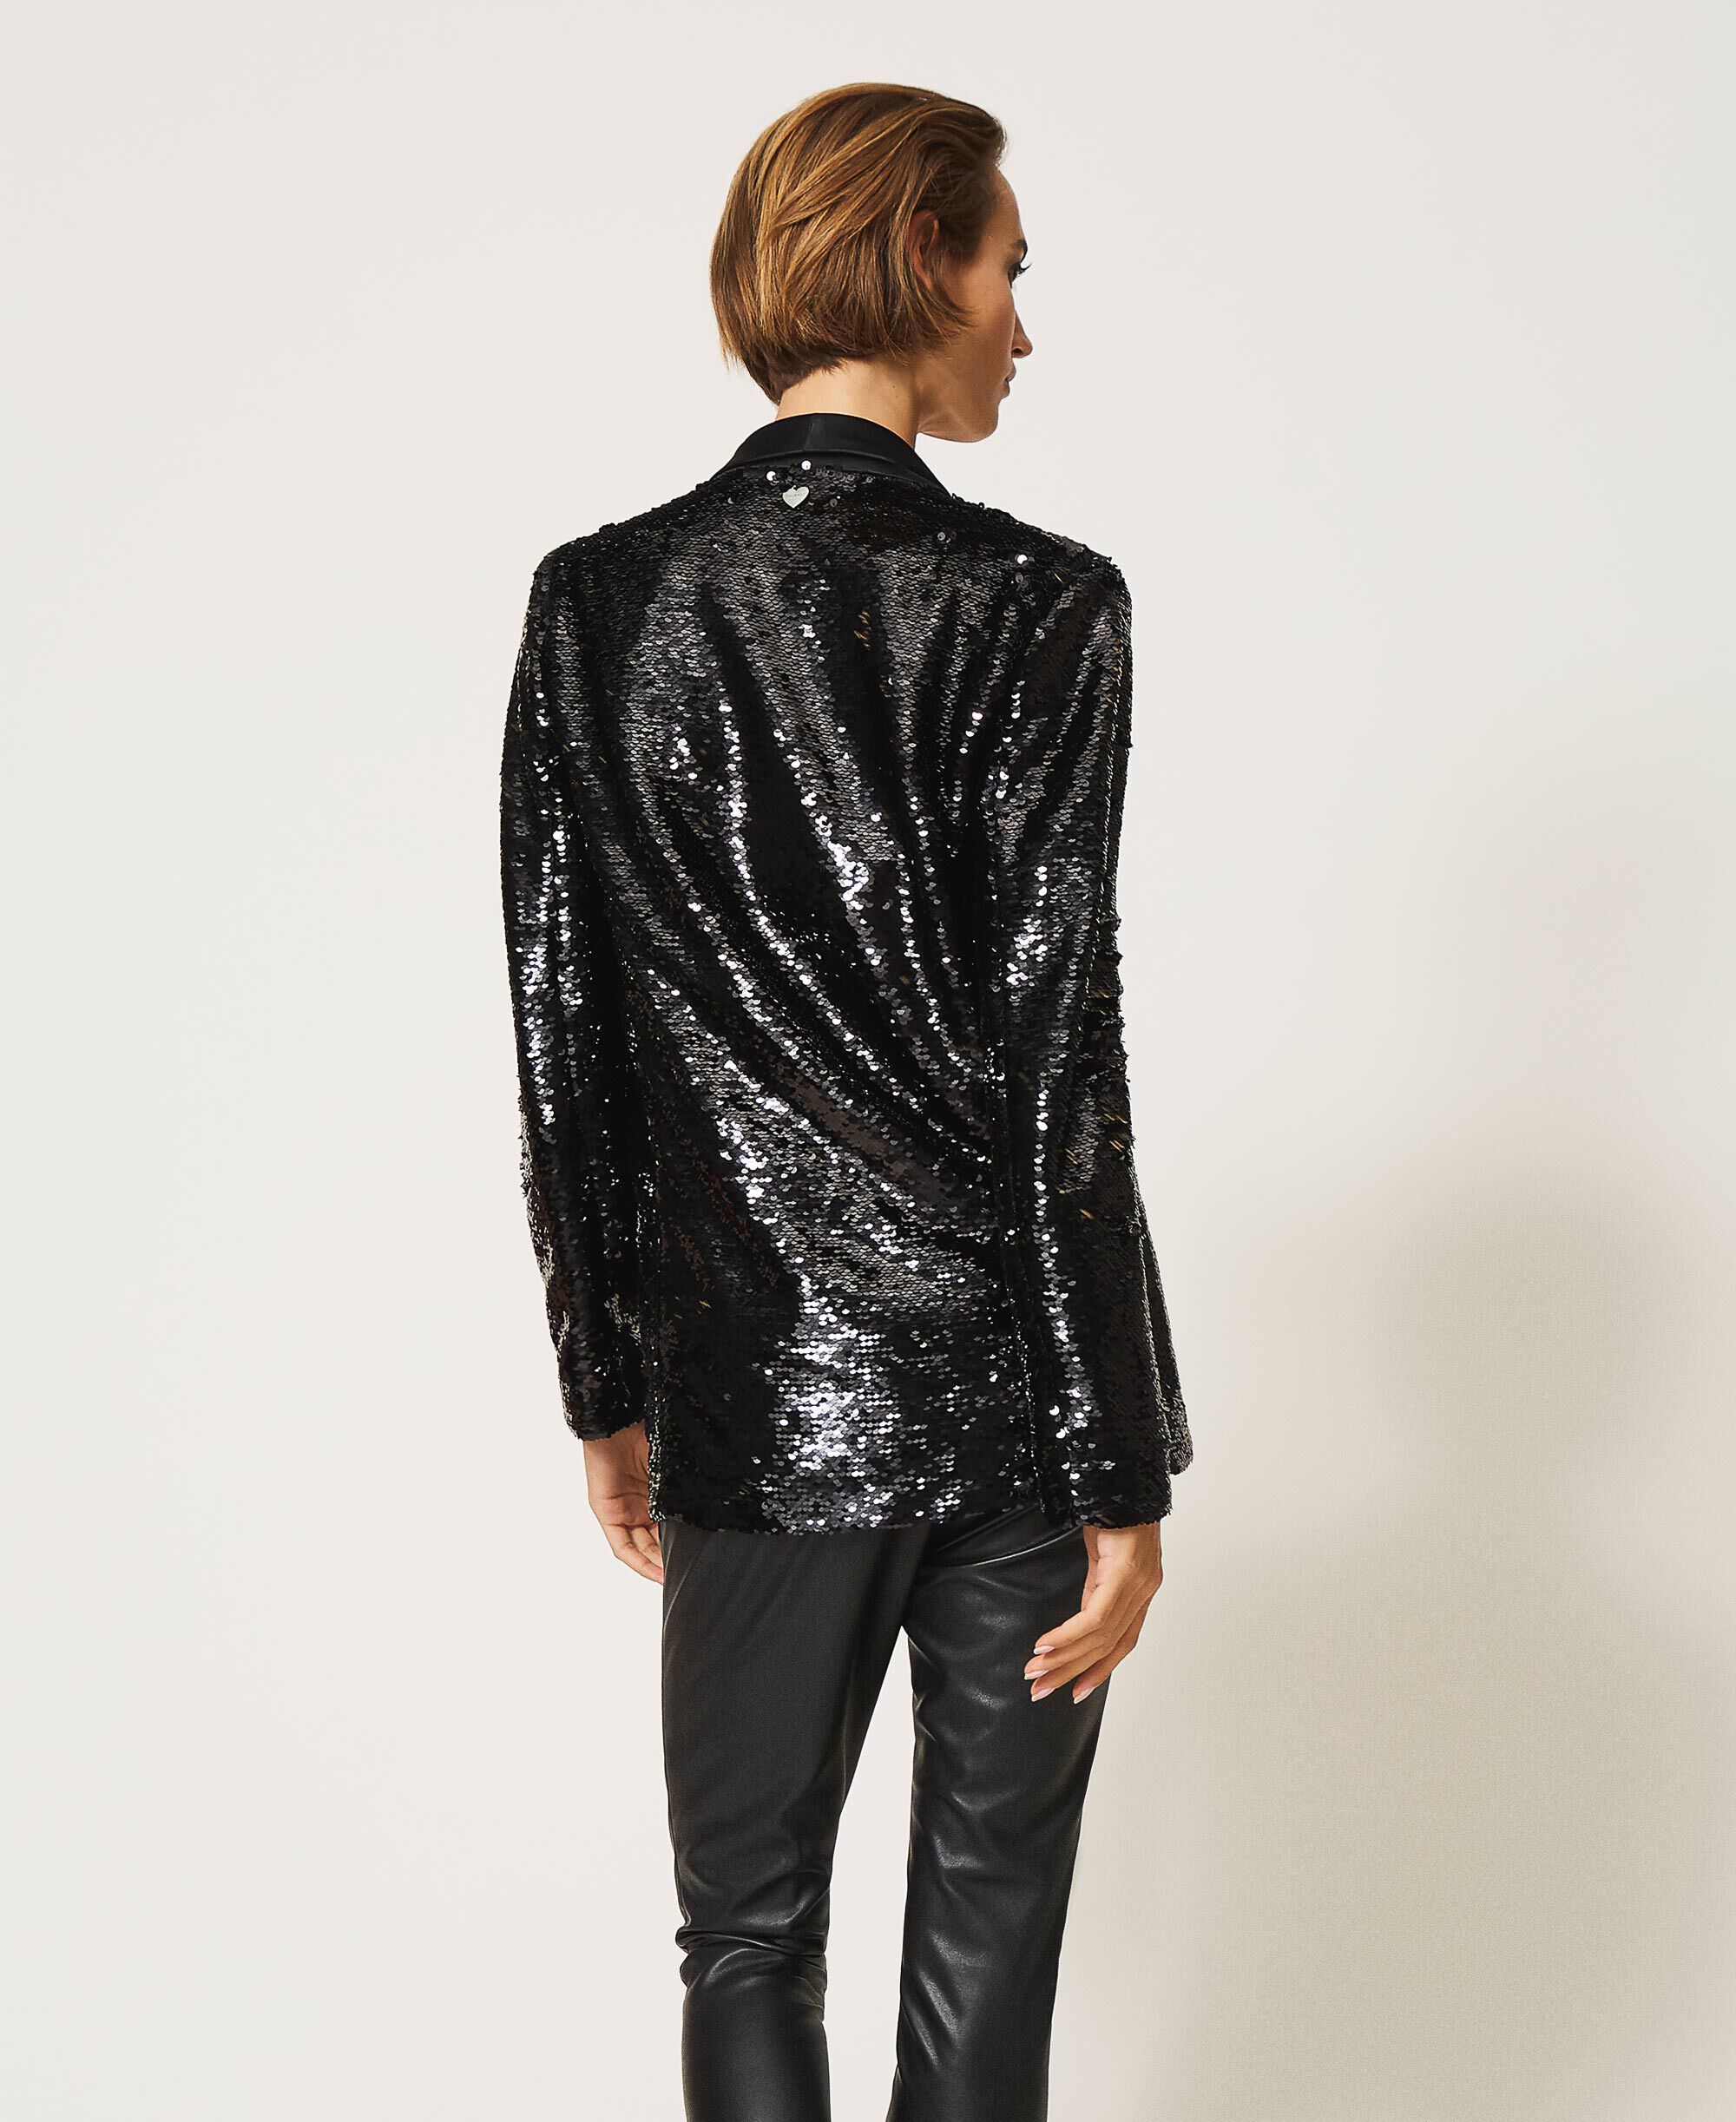 Kleding Gender-neutrale kleding volwassenen Blazers Desperately Seeking Inspired Cato Size 18/20 Black Glitter Jacket 